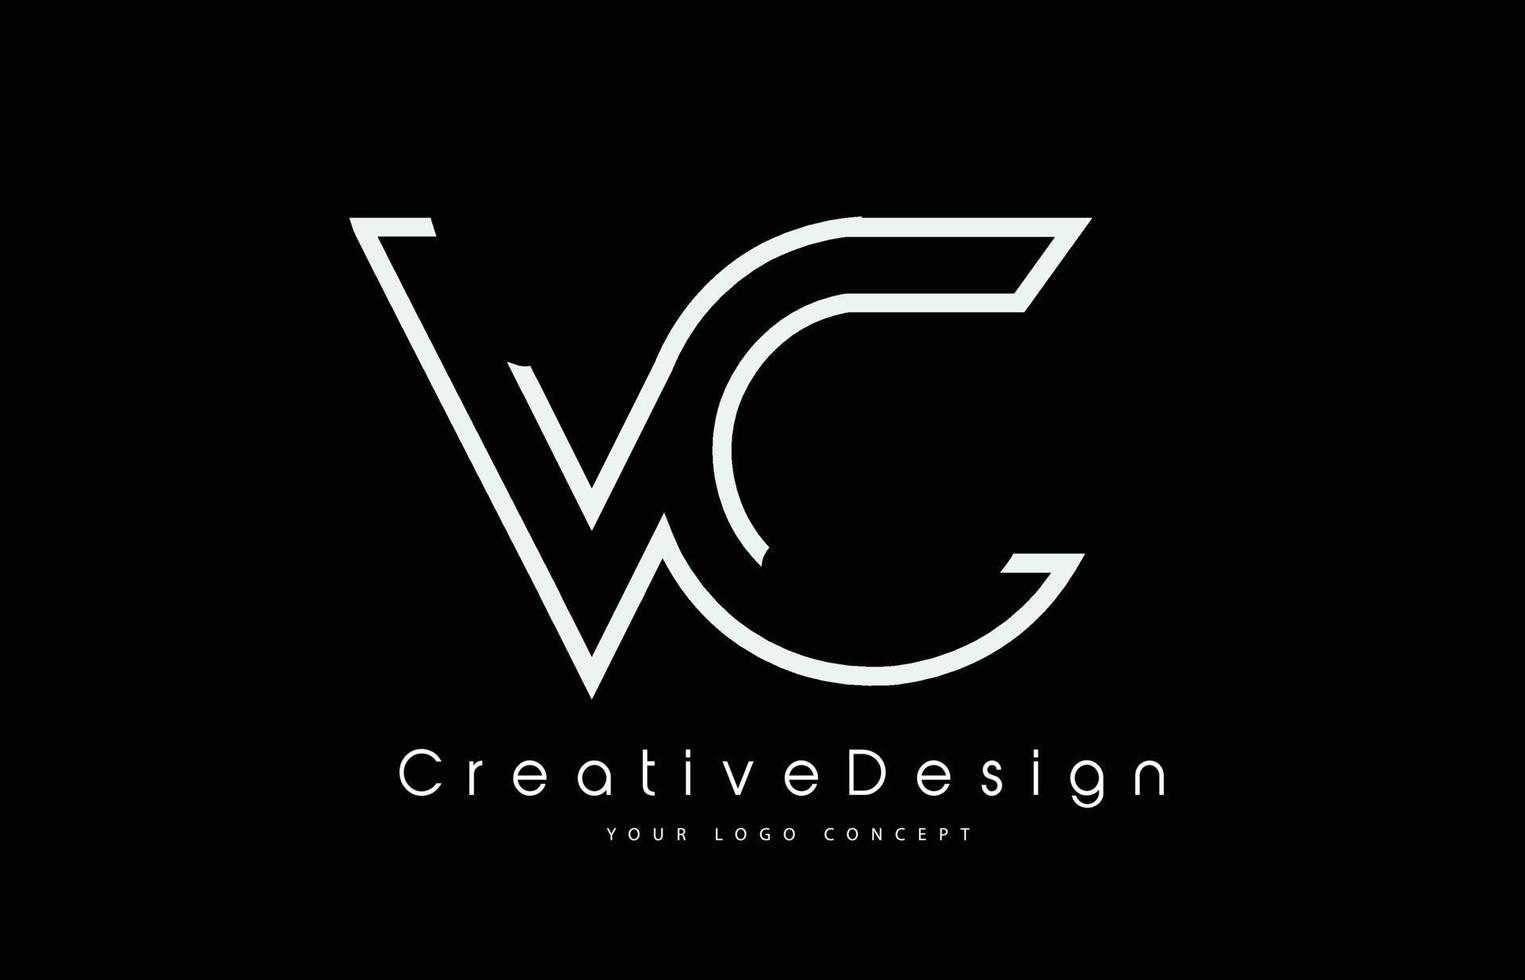 VC V C Letter Logo Design in White Colors. vector